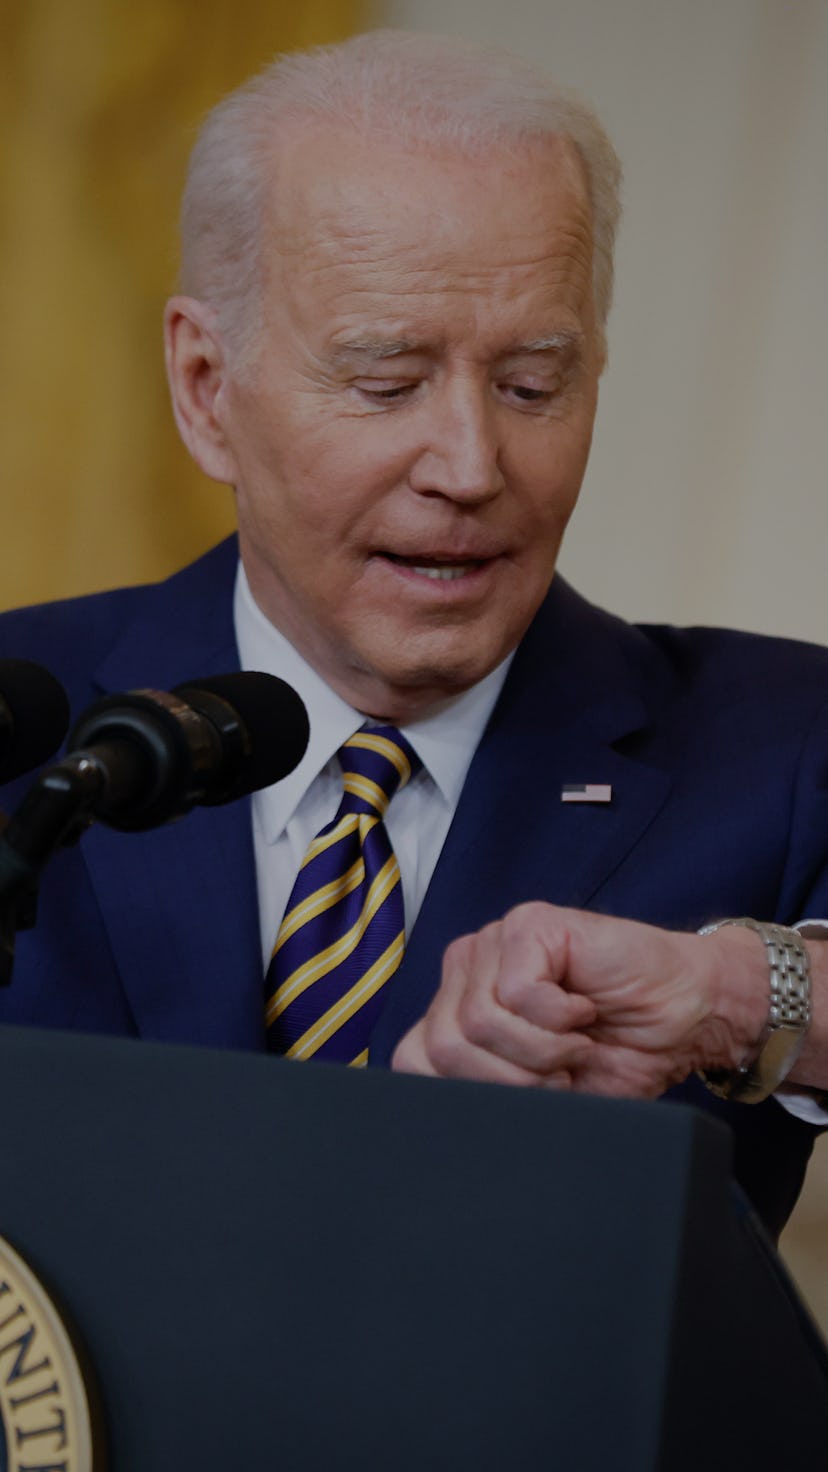 WASHINGTON, DC - JANUARY 19: U.S. President Joe Biden checks his watch while answering questions dur...